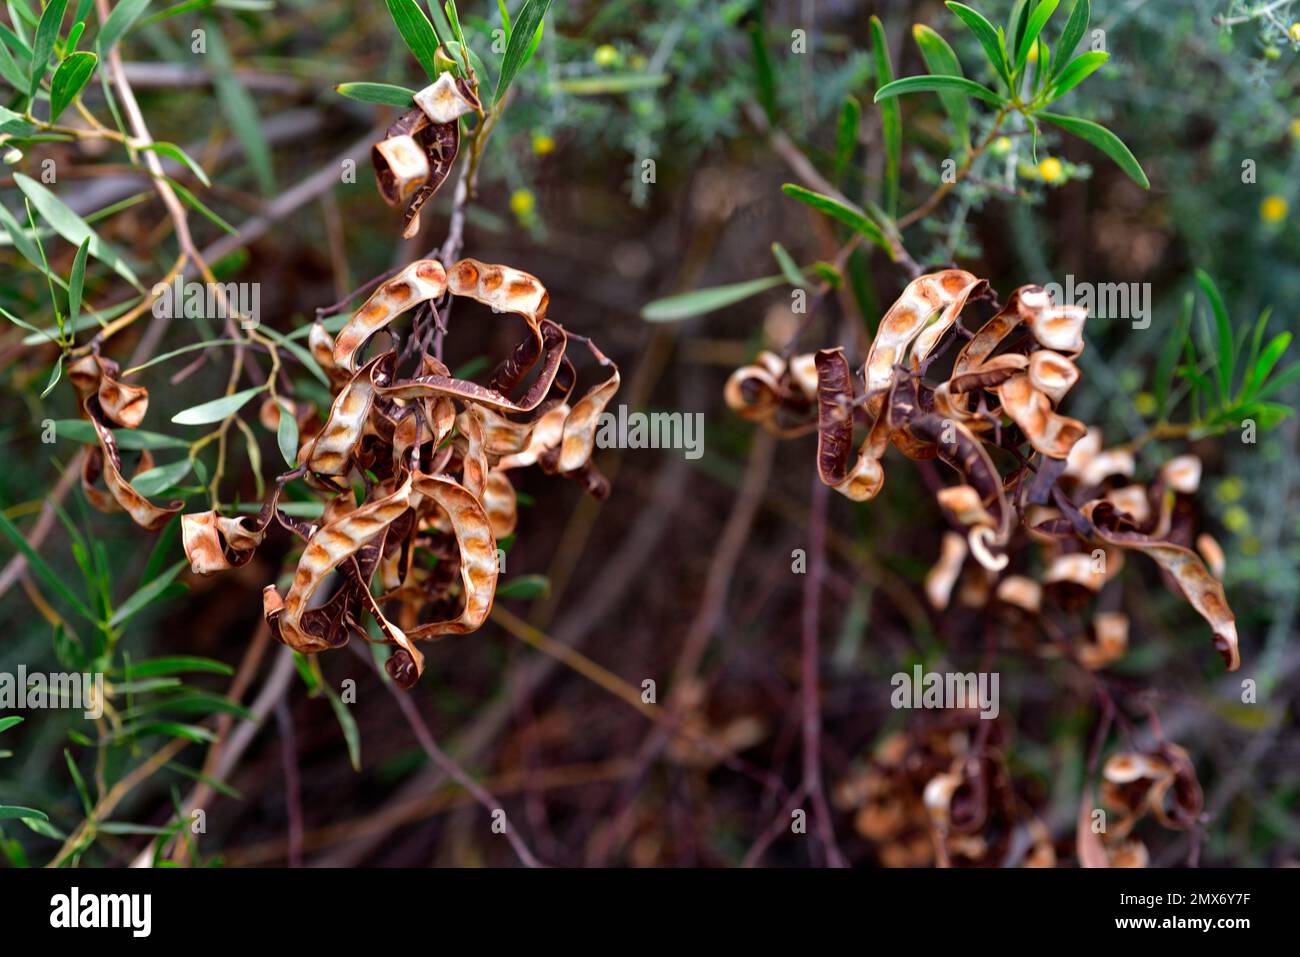 Mulga (Acacia aneura) is a shrub or small tree native to arid regions of Australia. Fruits detail. Stock Photo